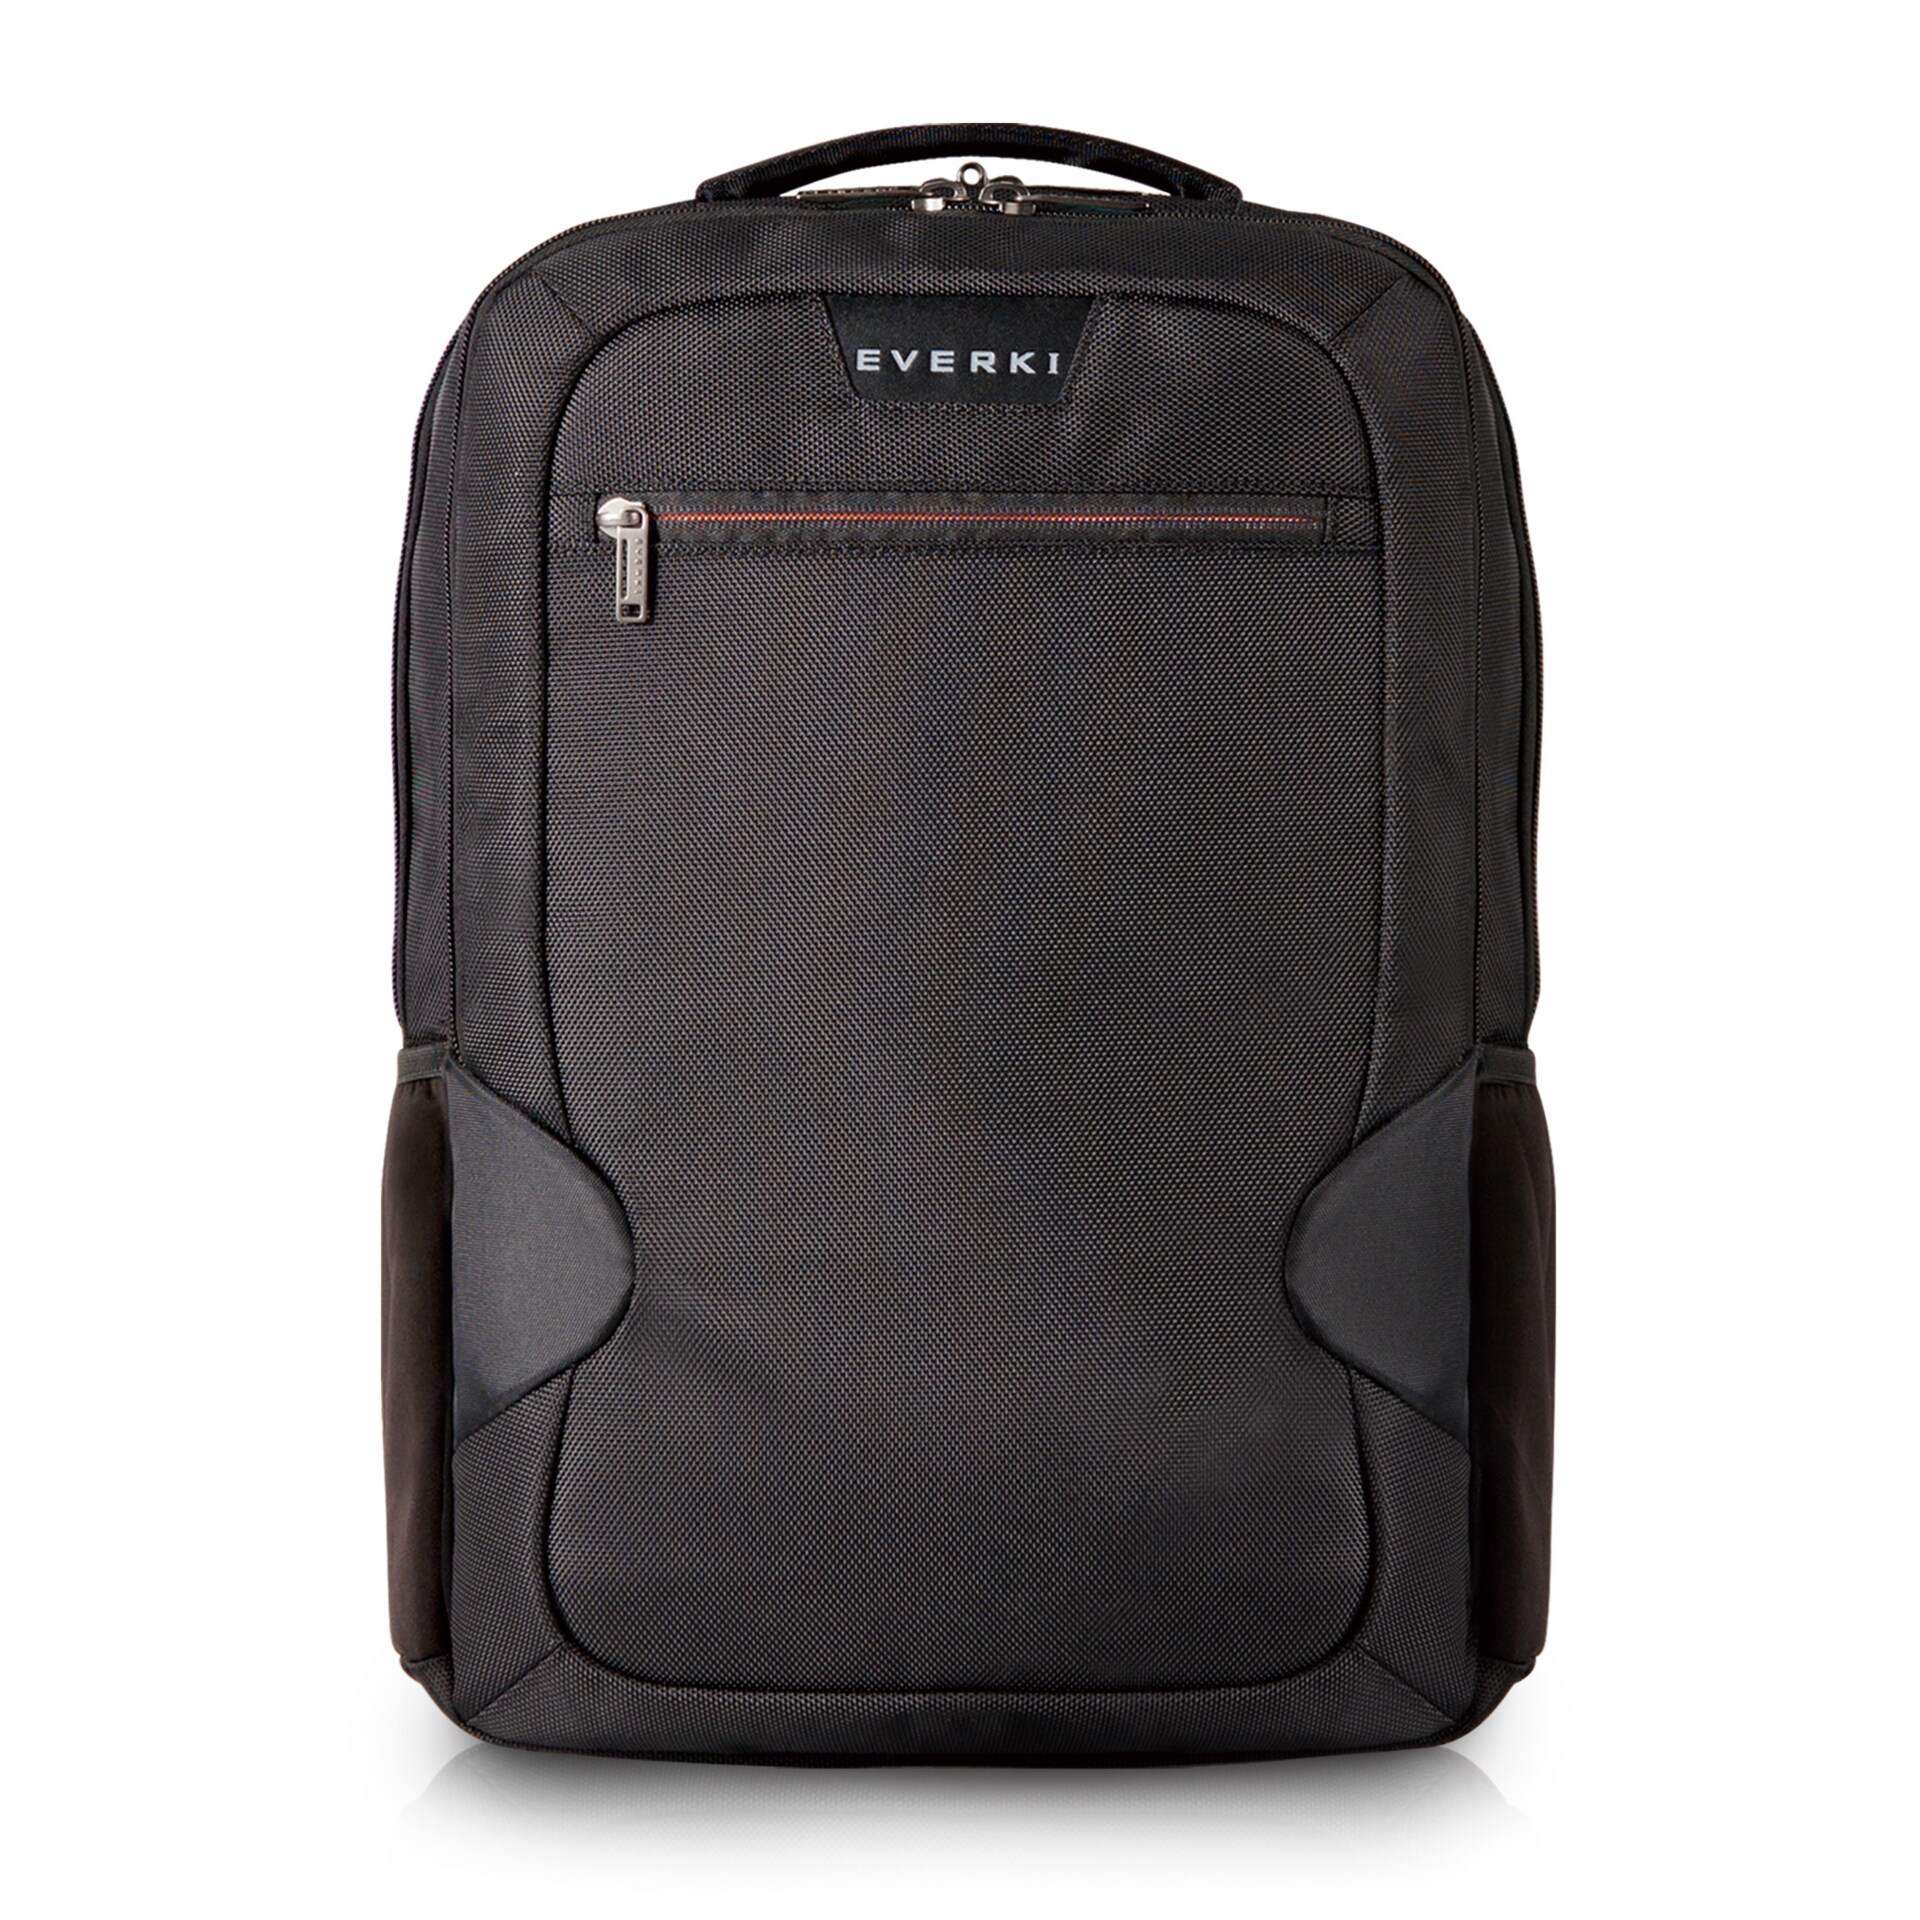 Everki Studio - notebook carrying backpack